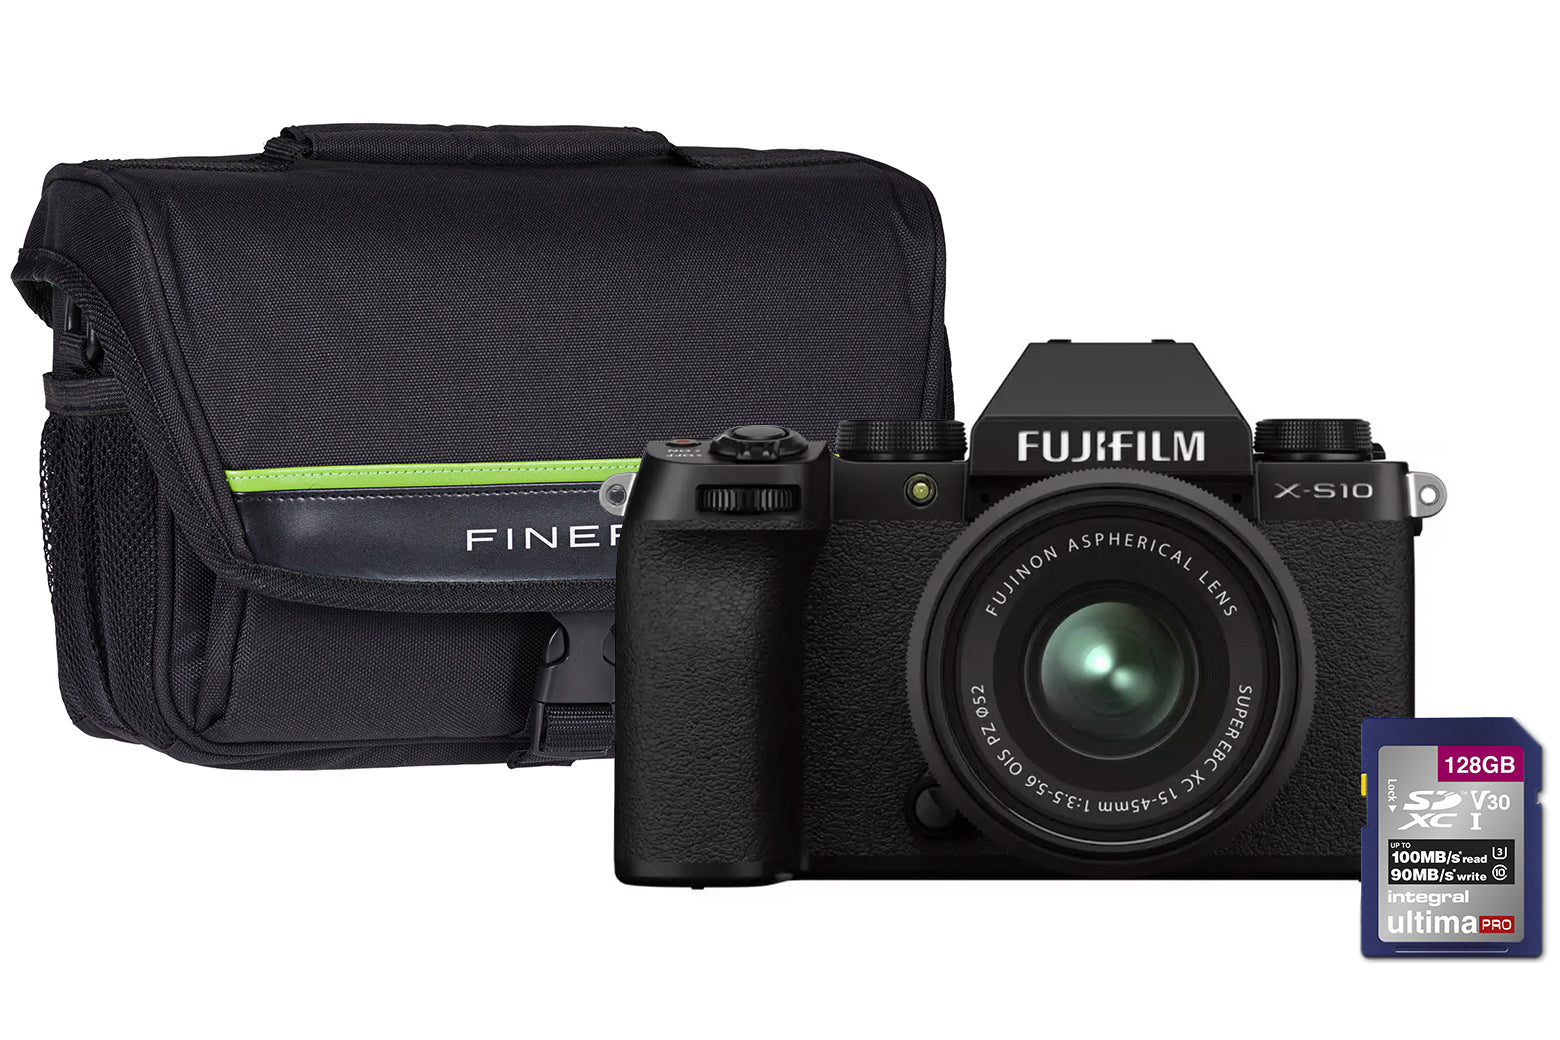 Fujifilm X-S10 Mirrorless Camera - Black (Camera + 15-45mm Lens + 128GB SD Card + Case)